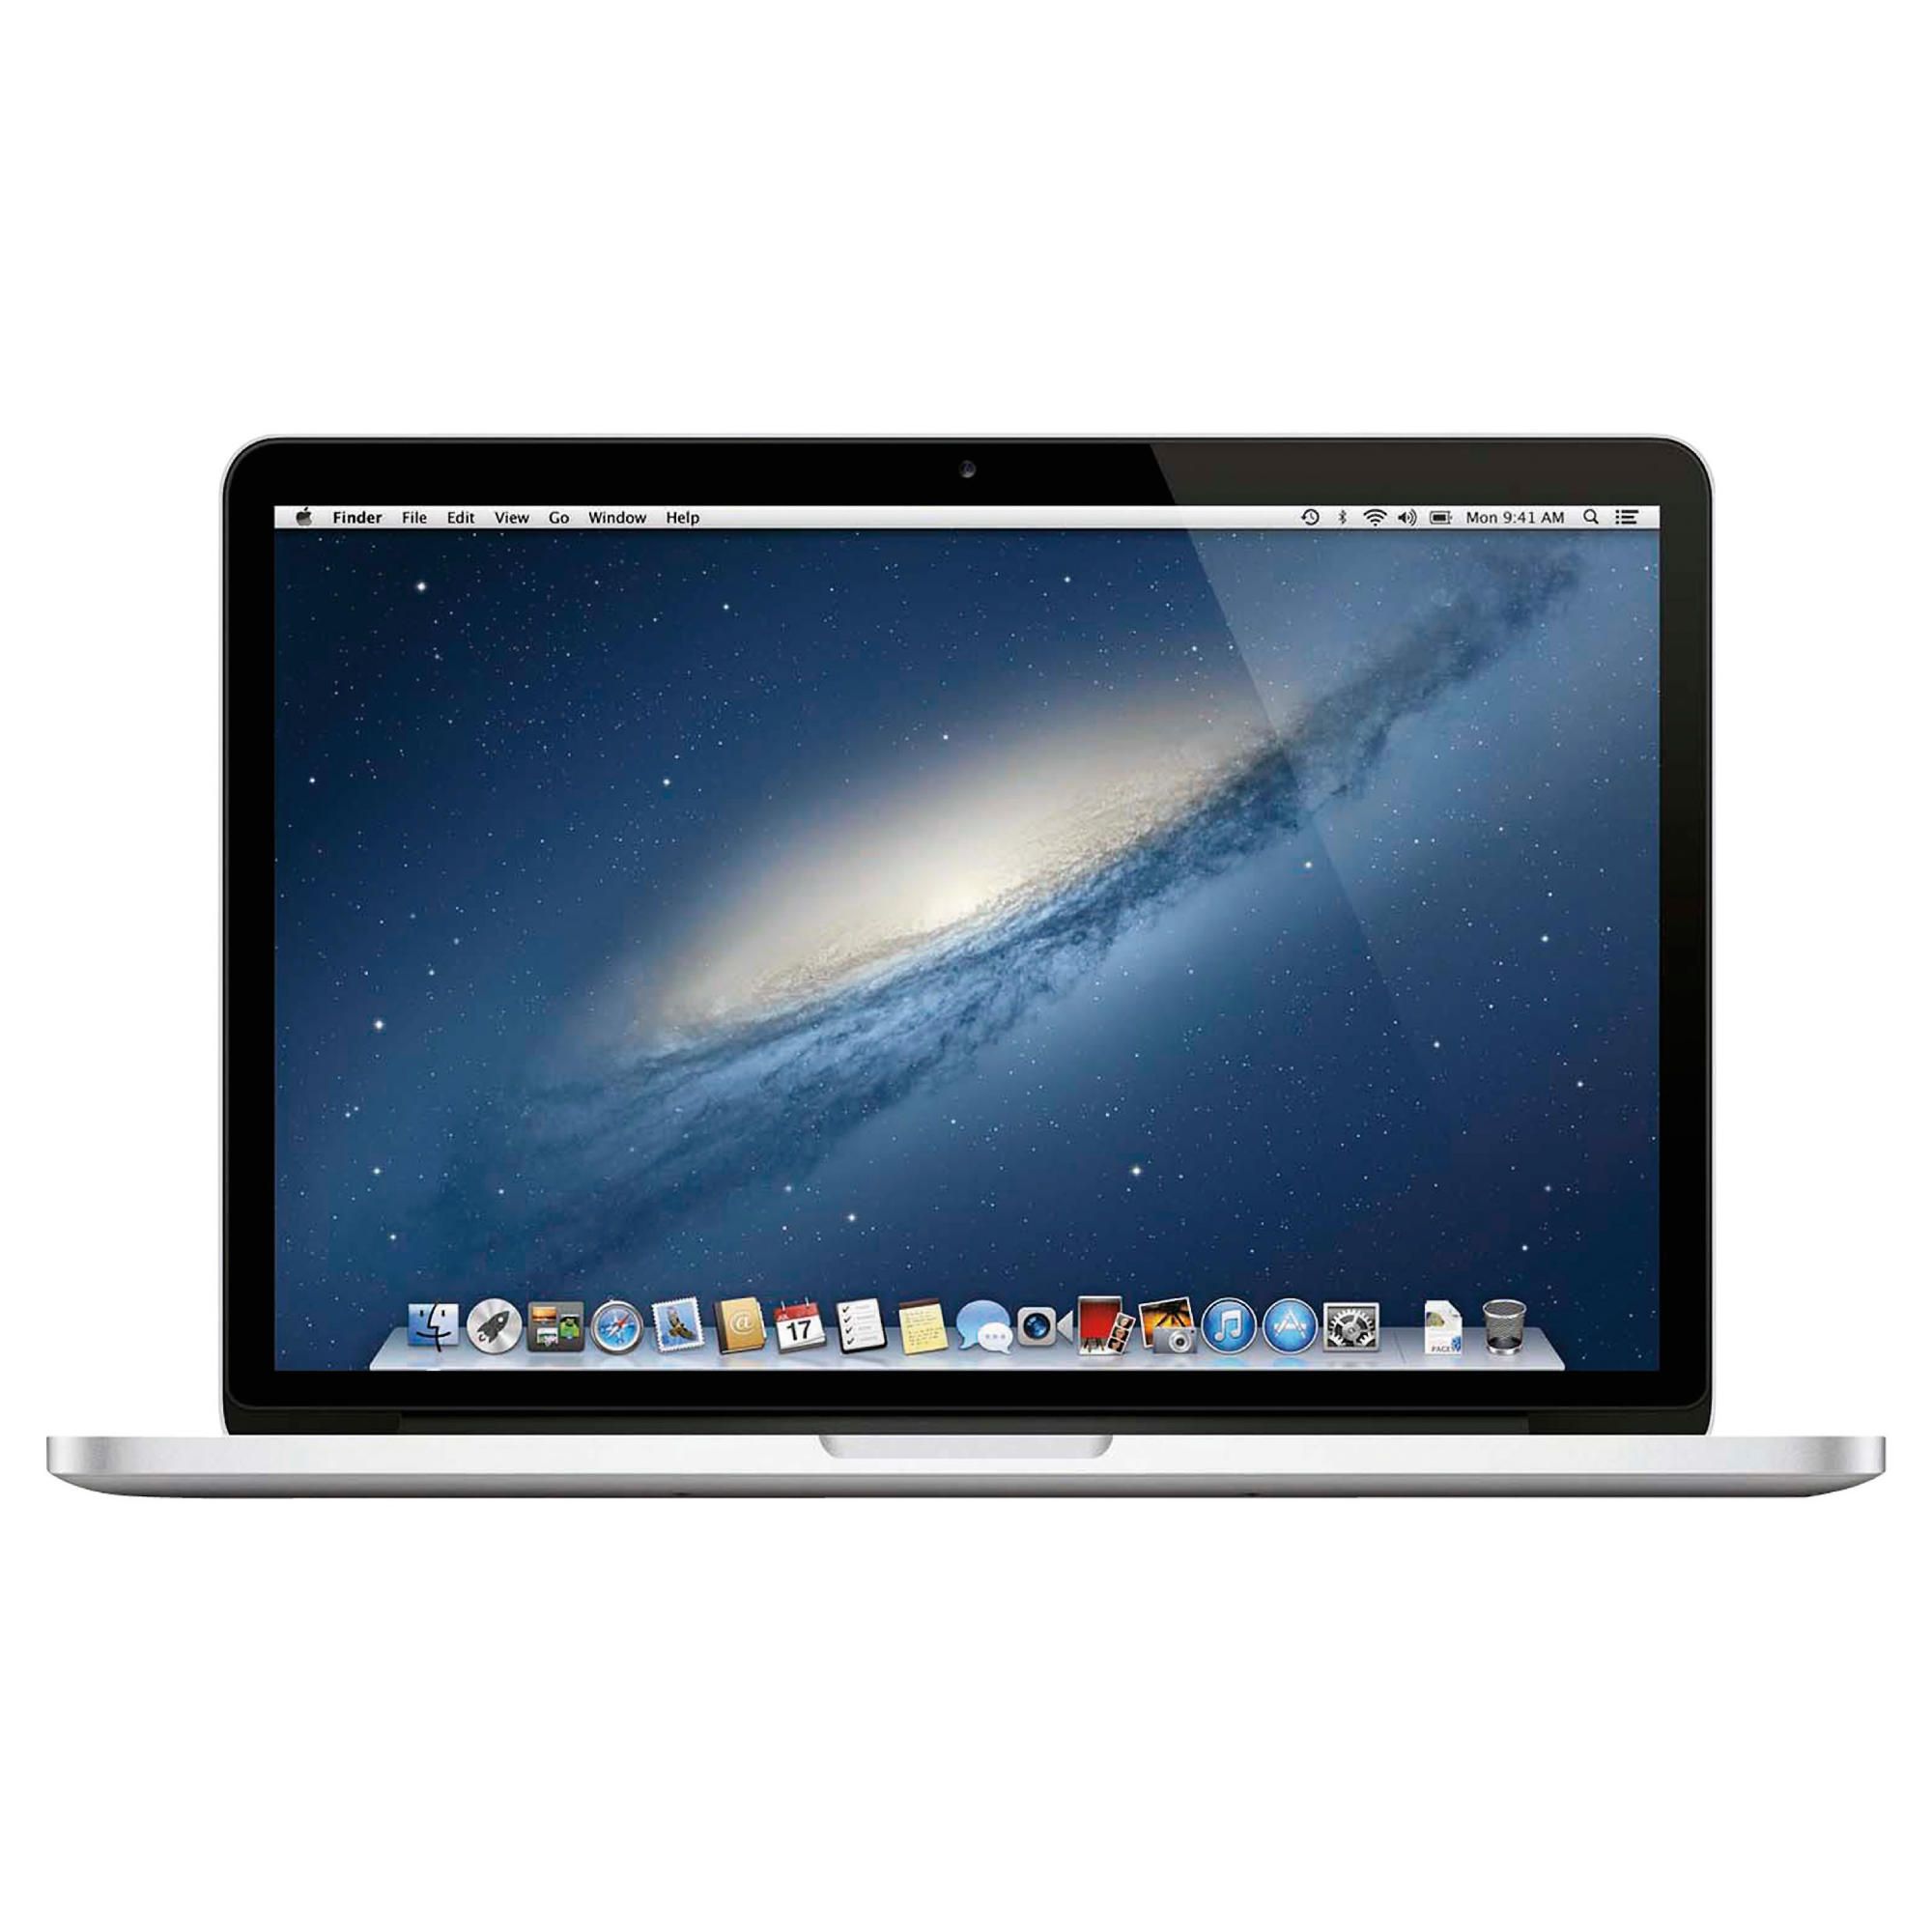 MacBook Pro 13.3” with Retina display  ME866B/A 2.6GHZ 8GB 512GB Flash Drive